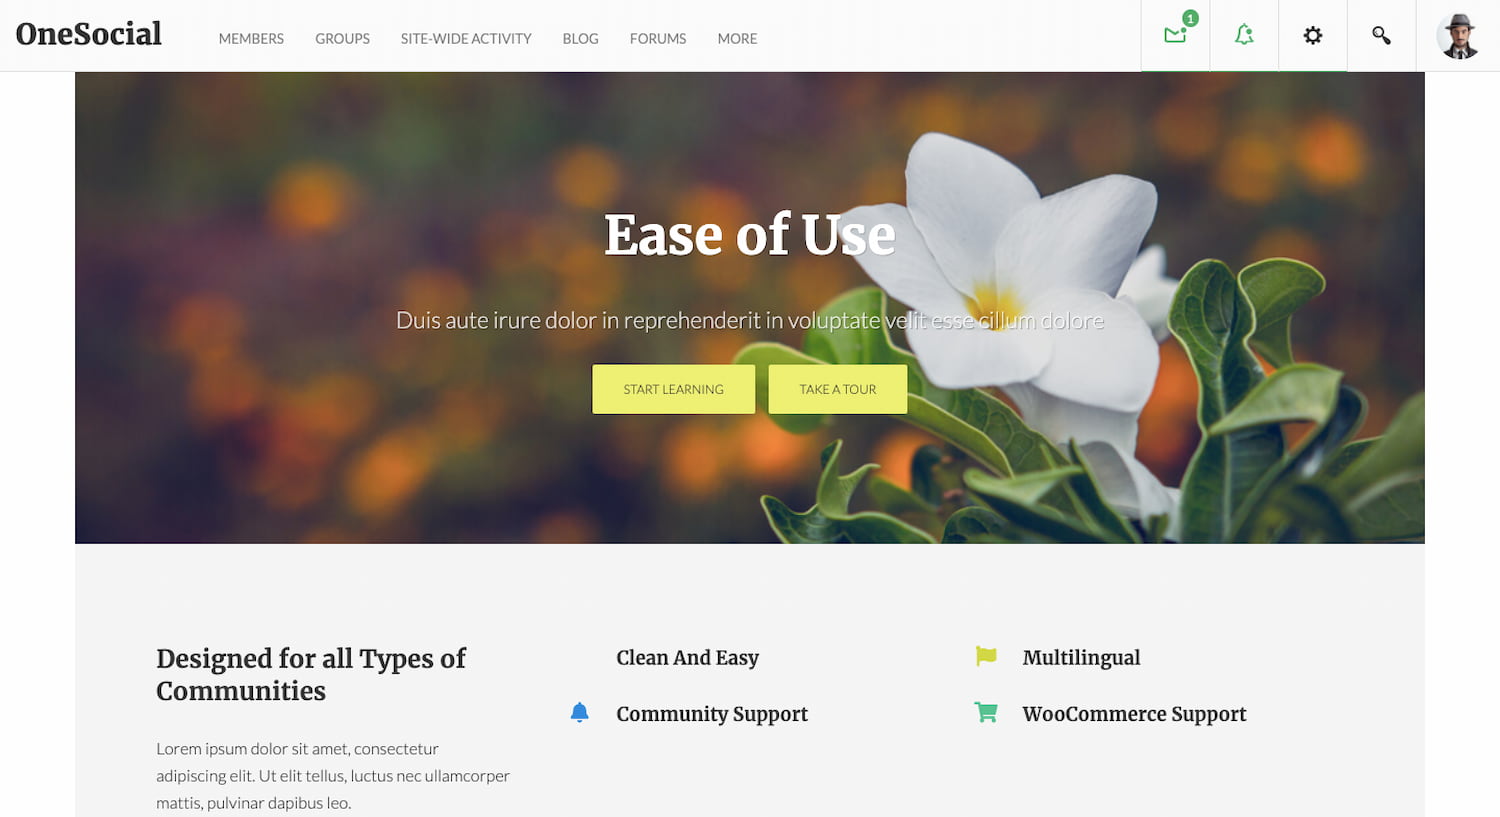 OneSocial theme demo shows a BuddyPress community website built on WordPress